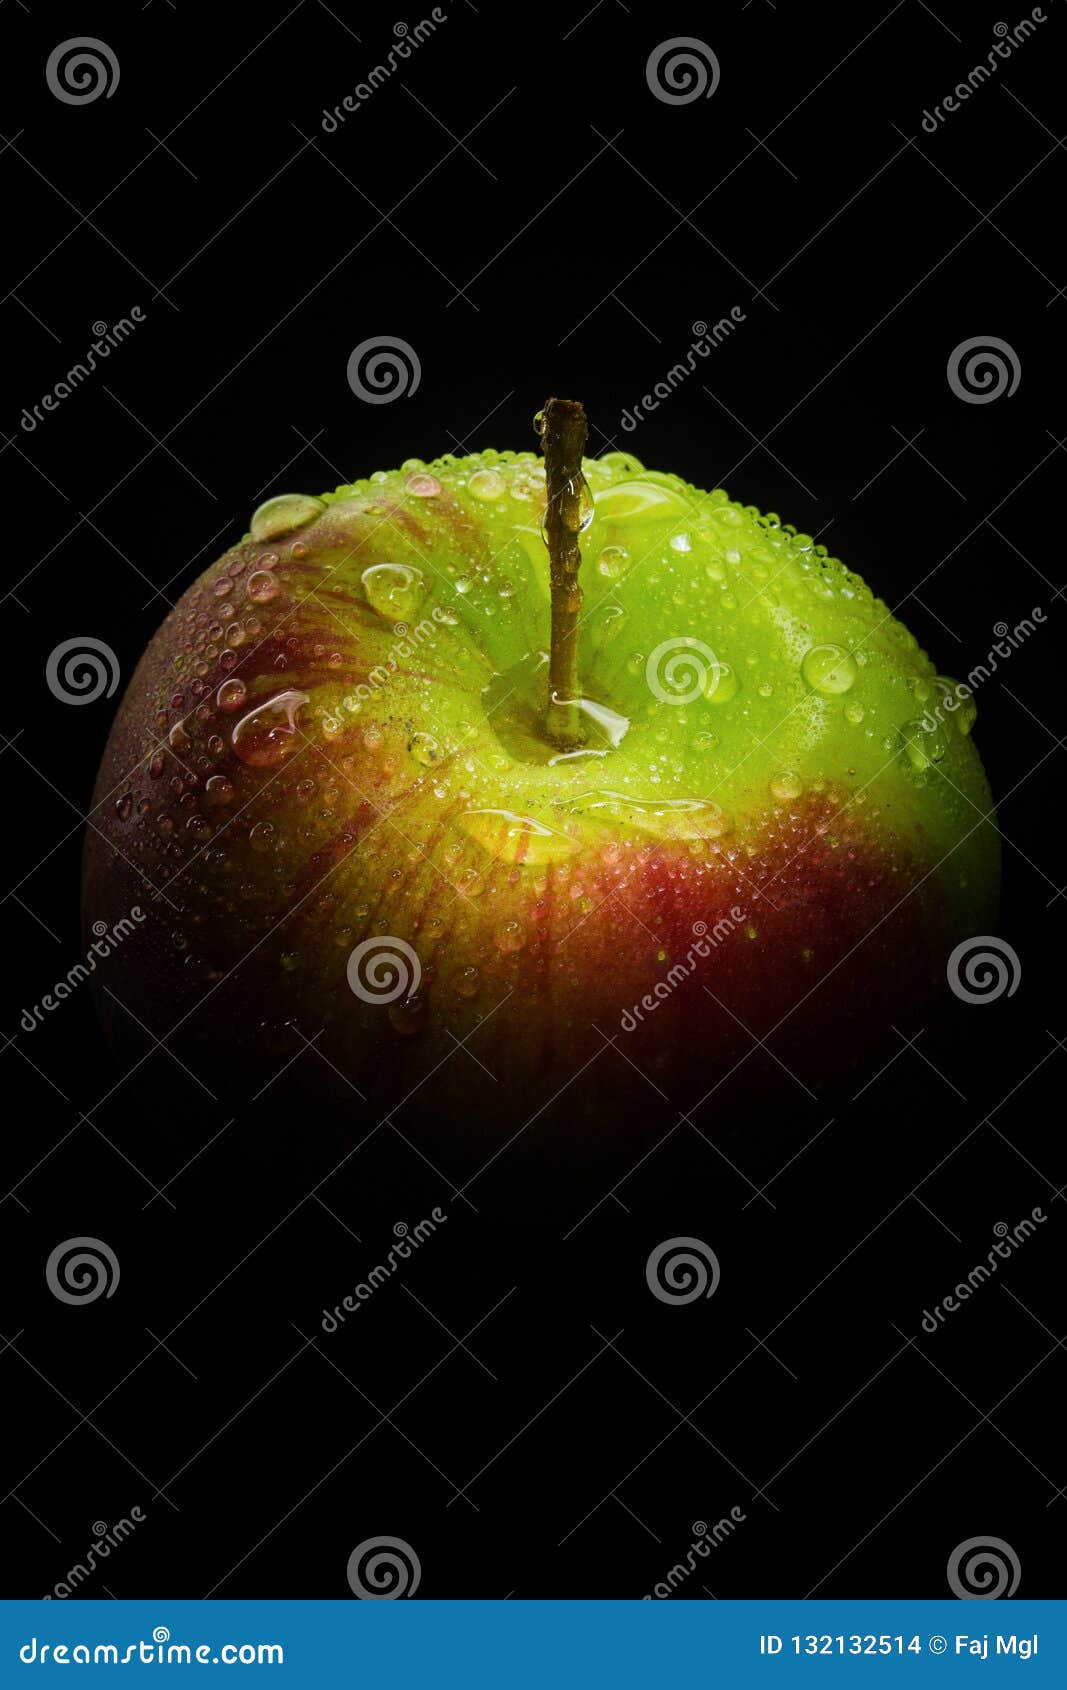 green apple in black isolation